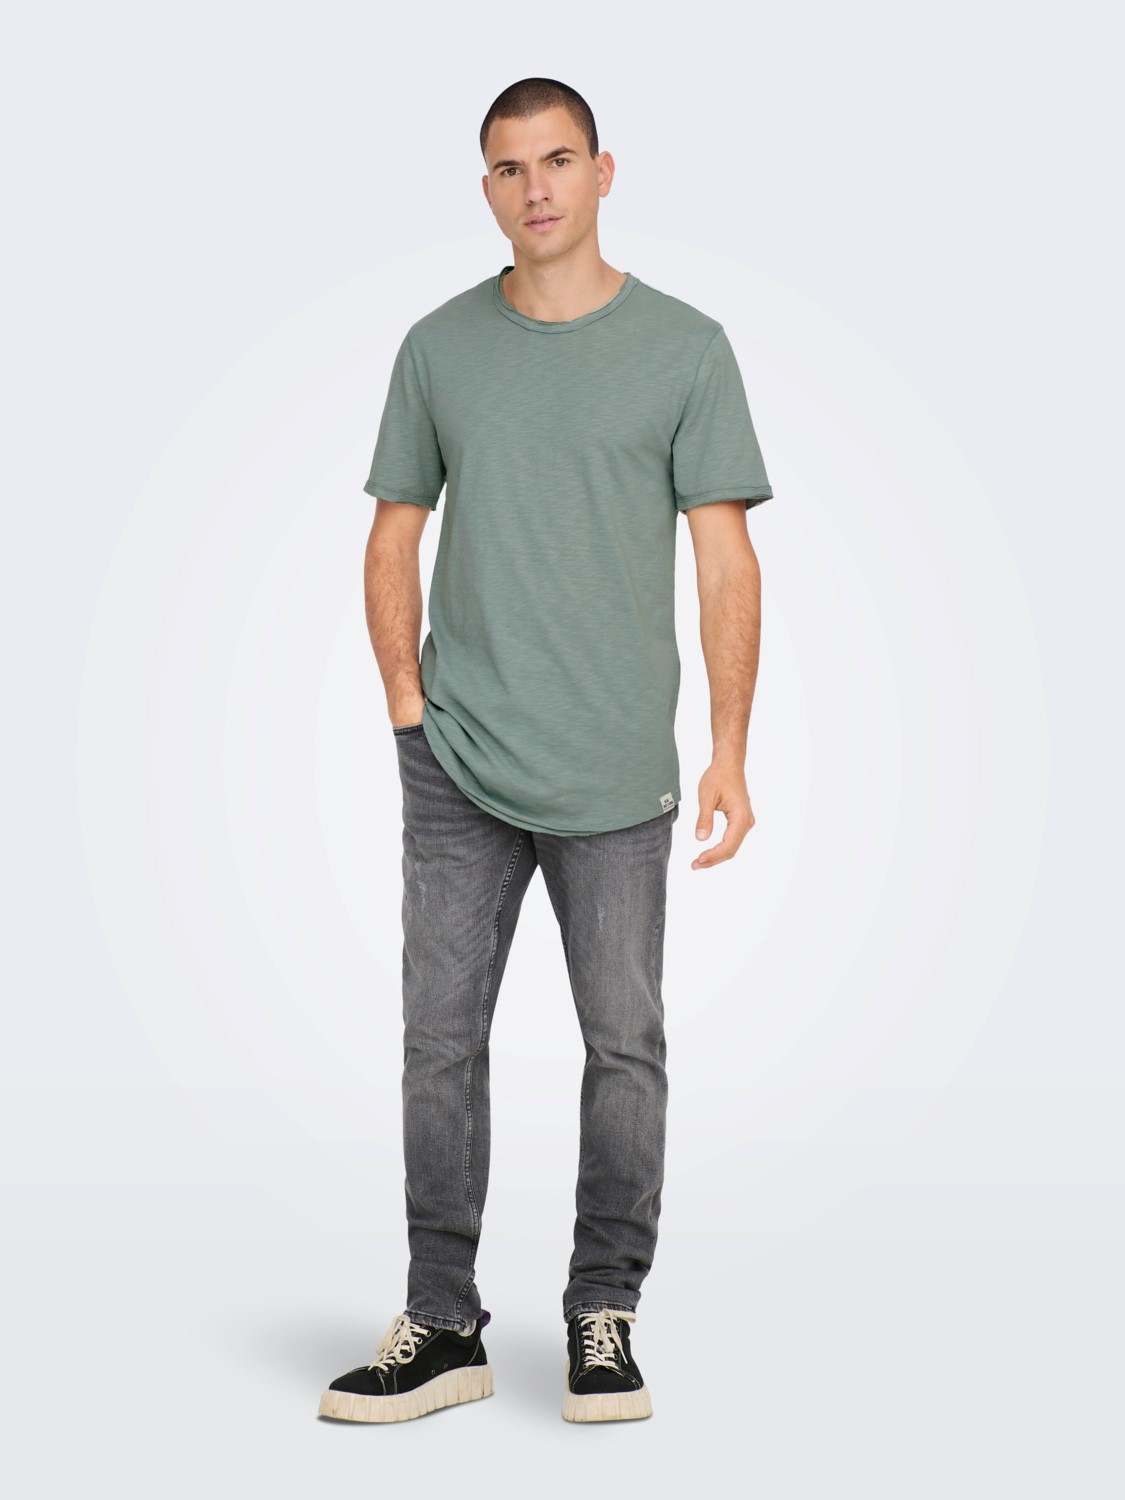 Se Benne Long Line Fit T-Shirt S/S - Chinois Green Medium hos monomen